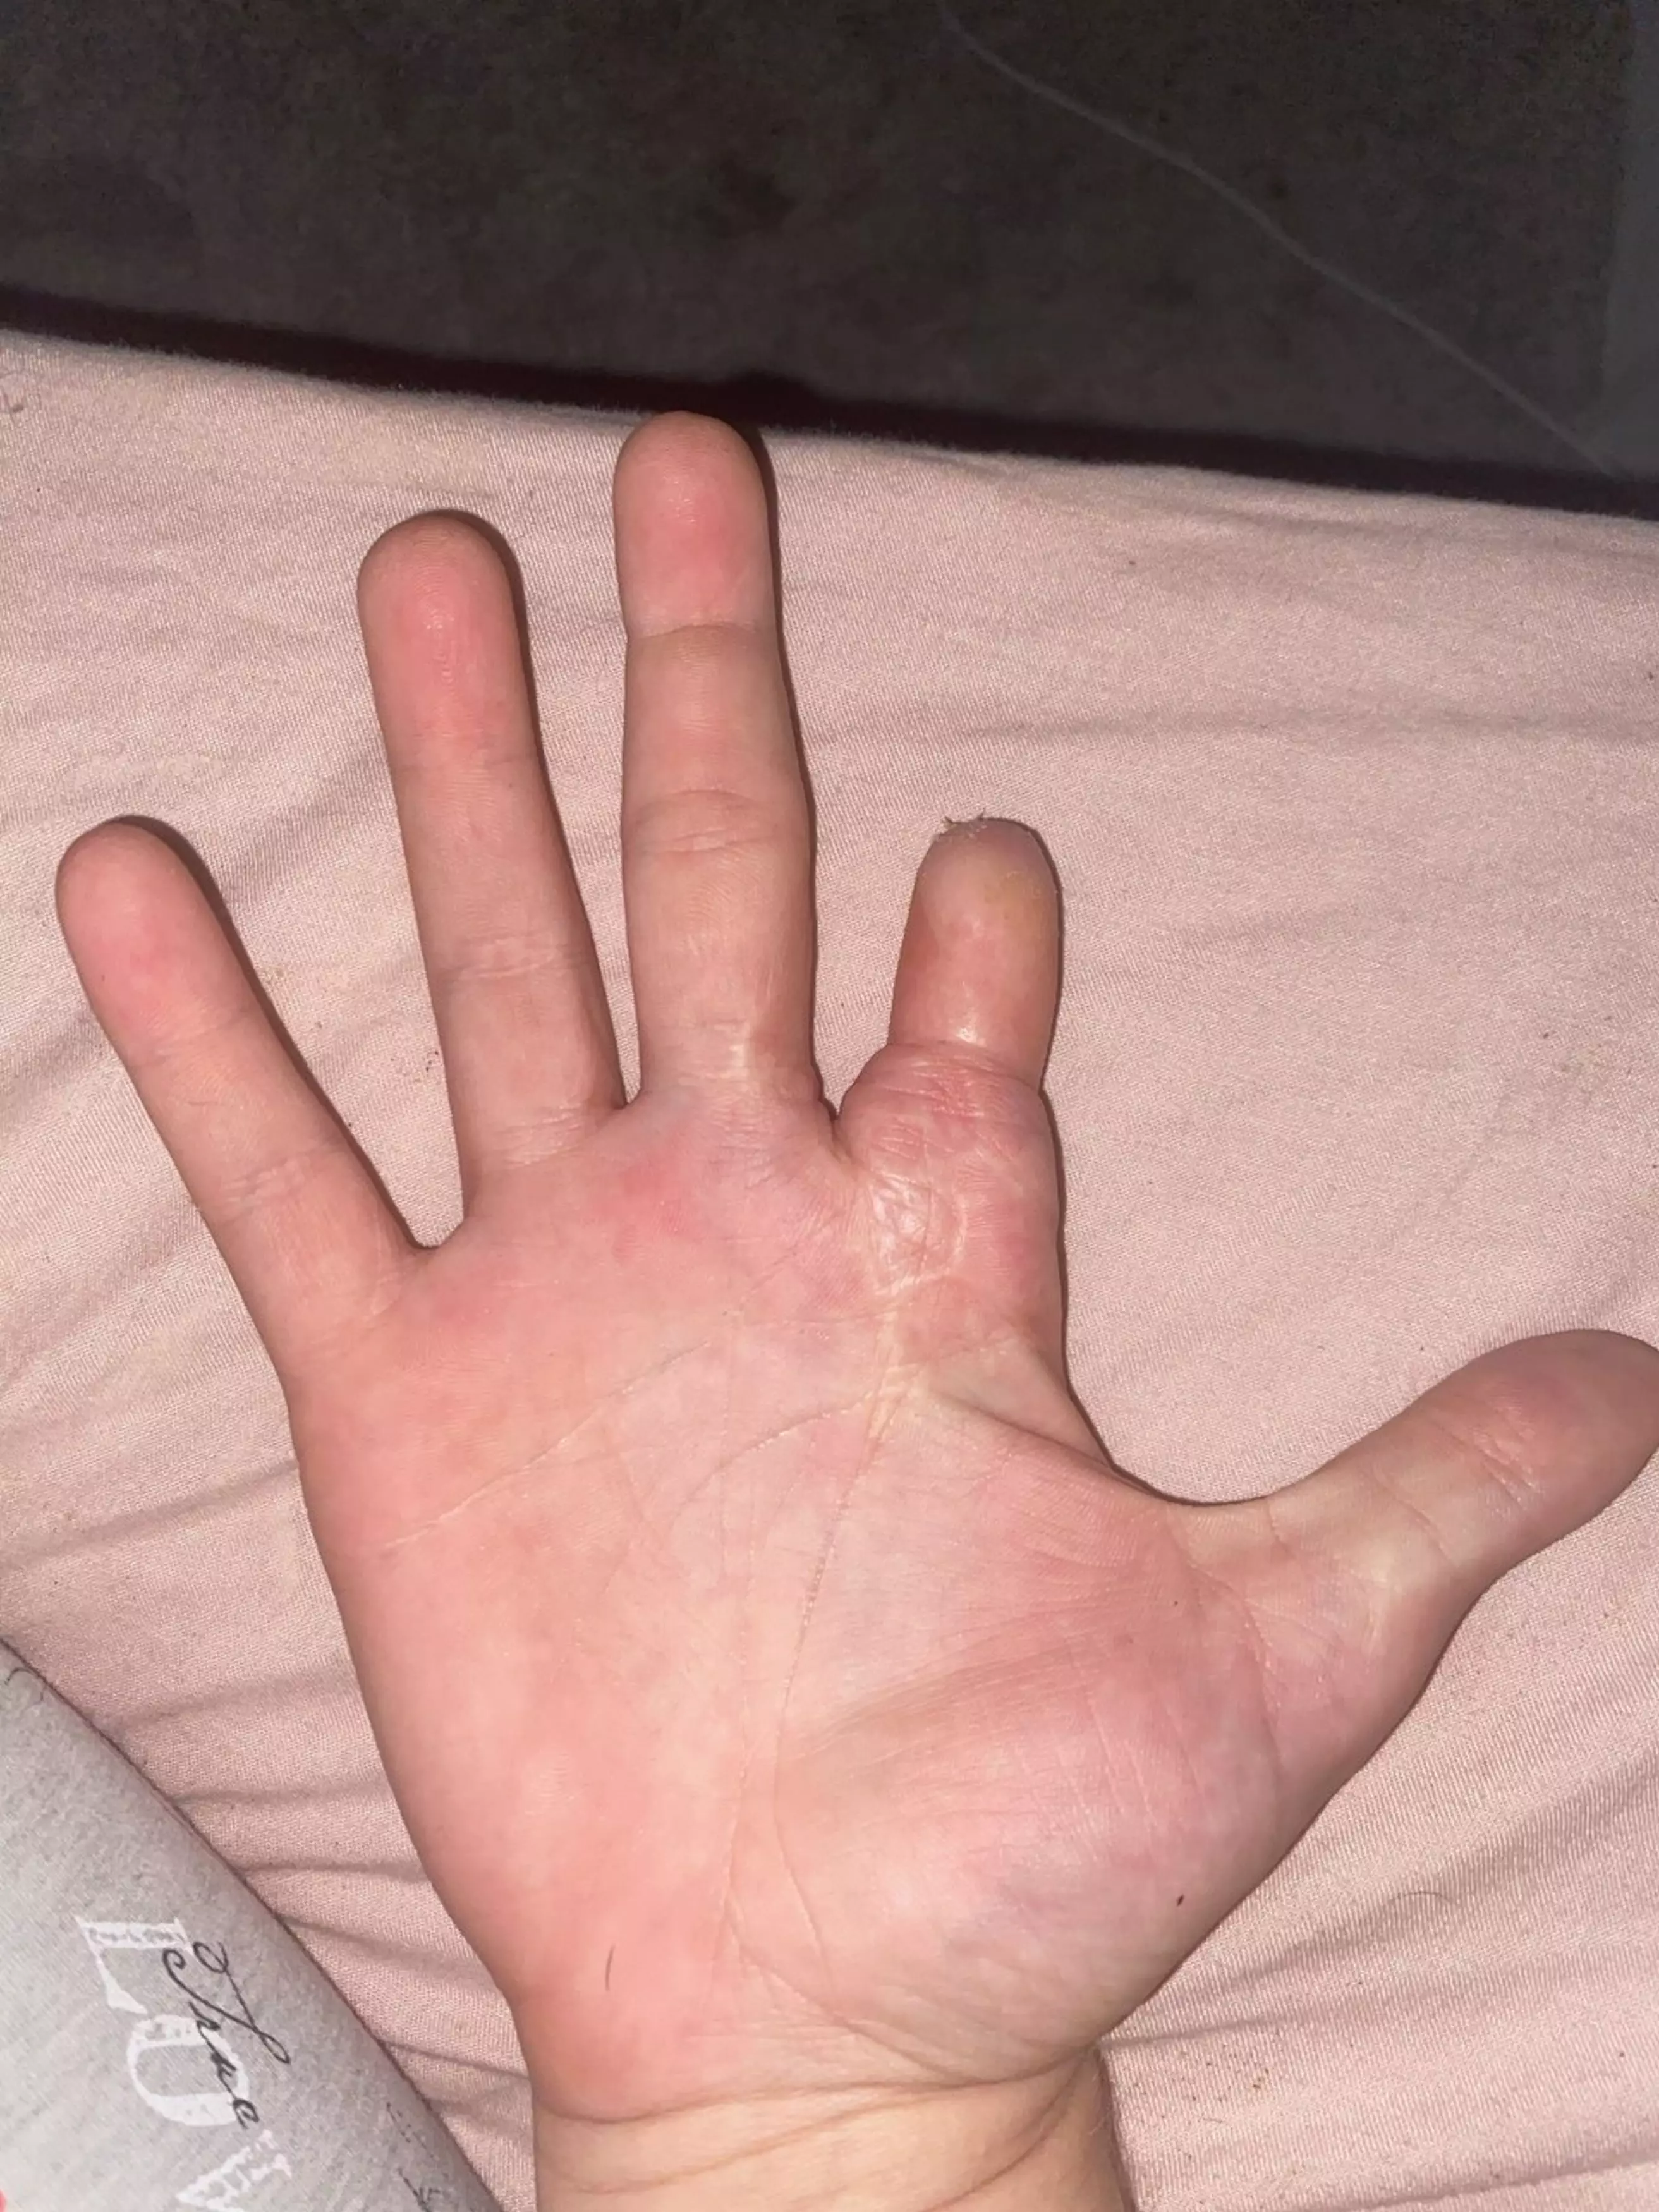 Sophie Collins lost her right index finger (